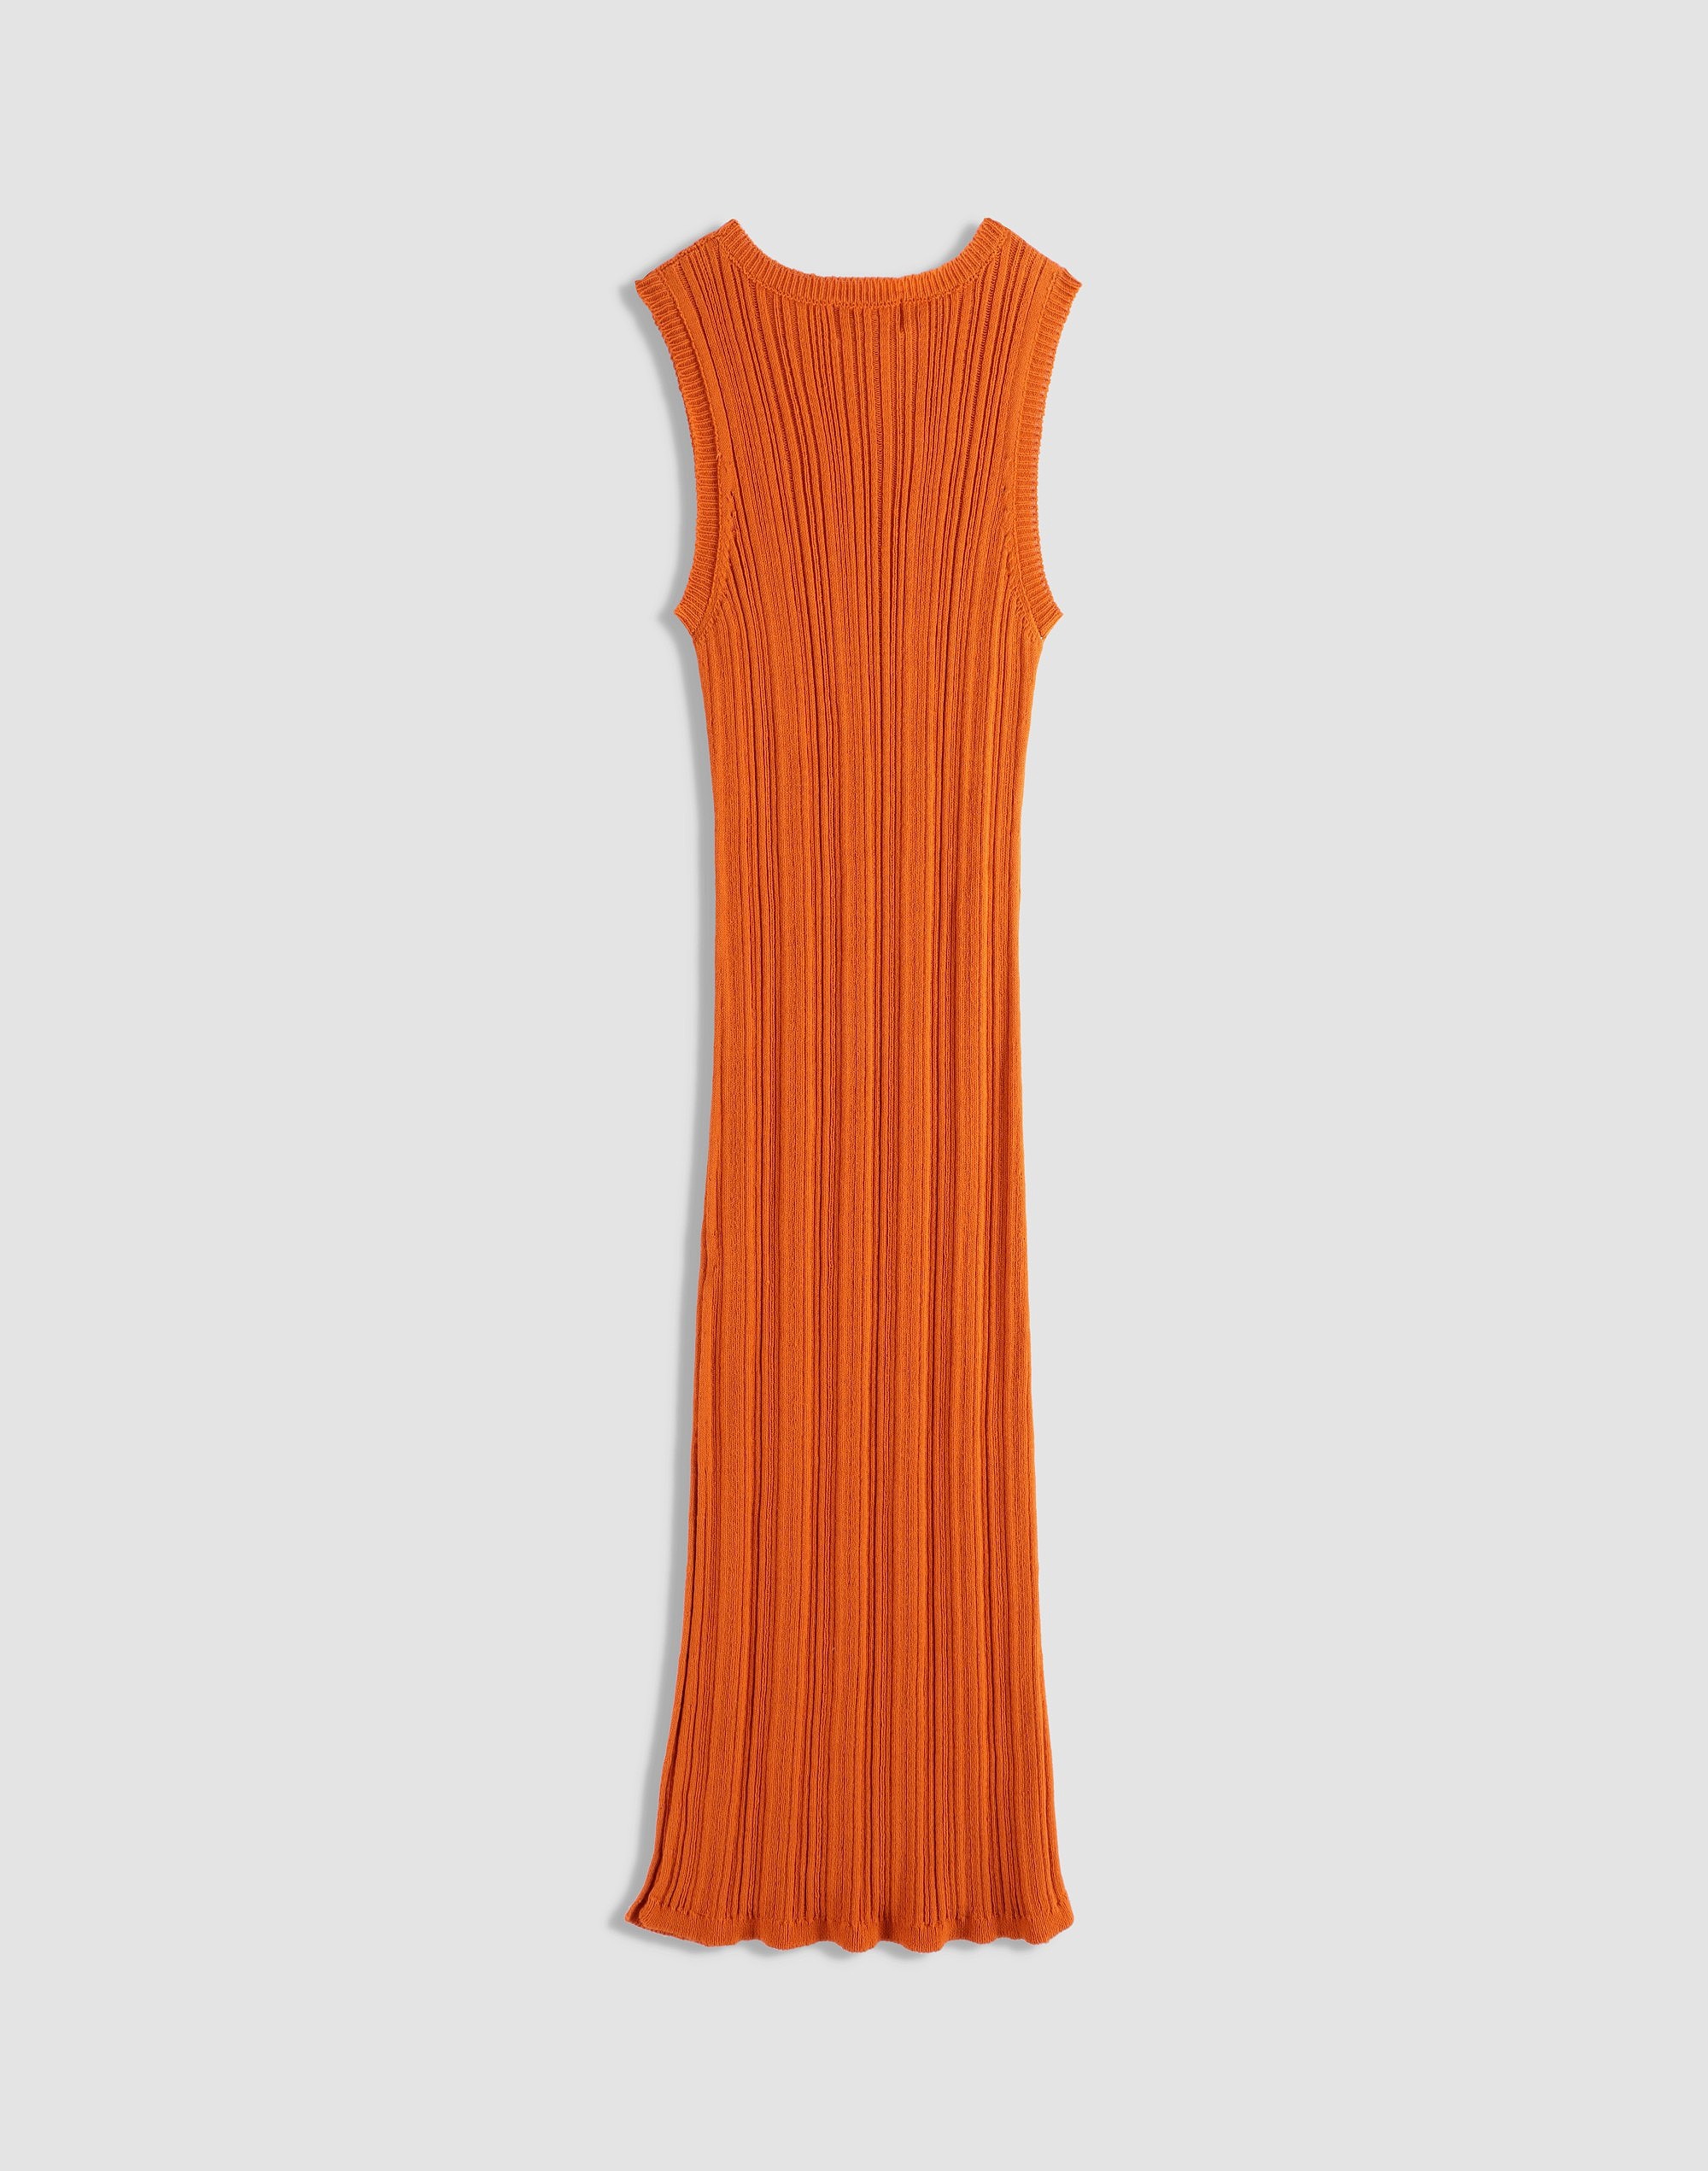 ALOHAS™ Breezy Sleeveless Knit Dress